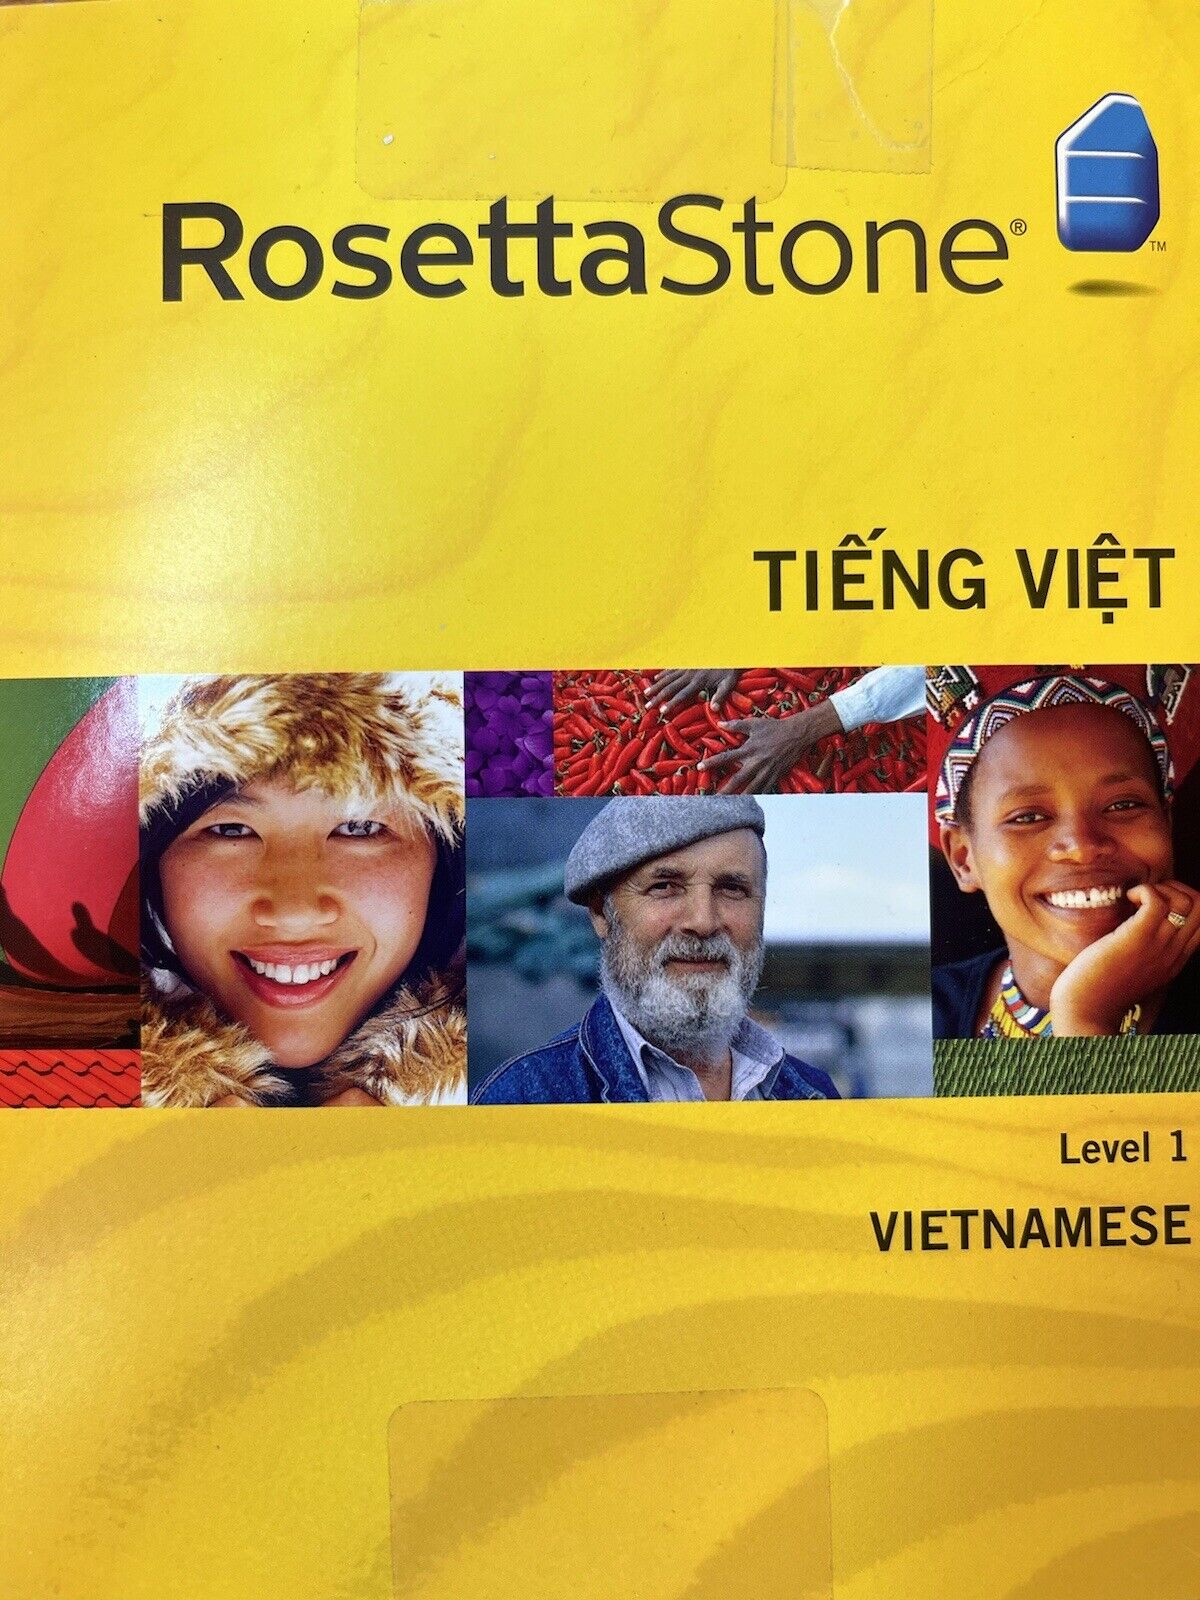 ROSETTA STONE - Tieng Viet - VIETNAMESE - VERSION 2 - LEVEL 1 Win/Mac CD ROM